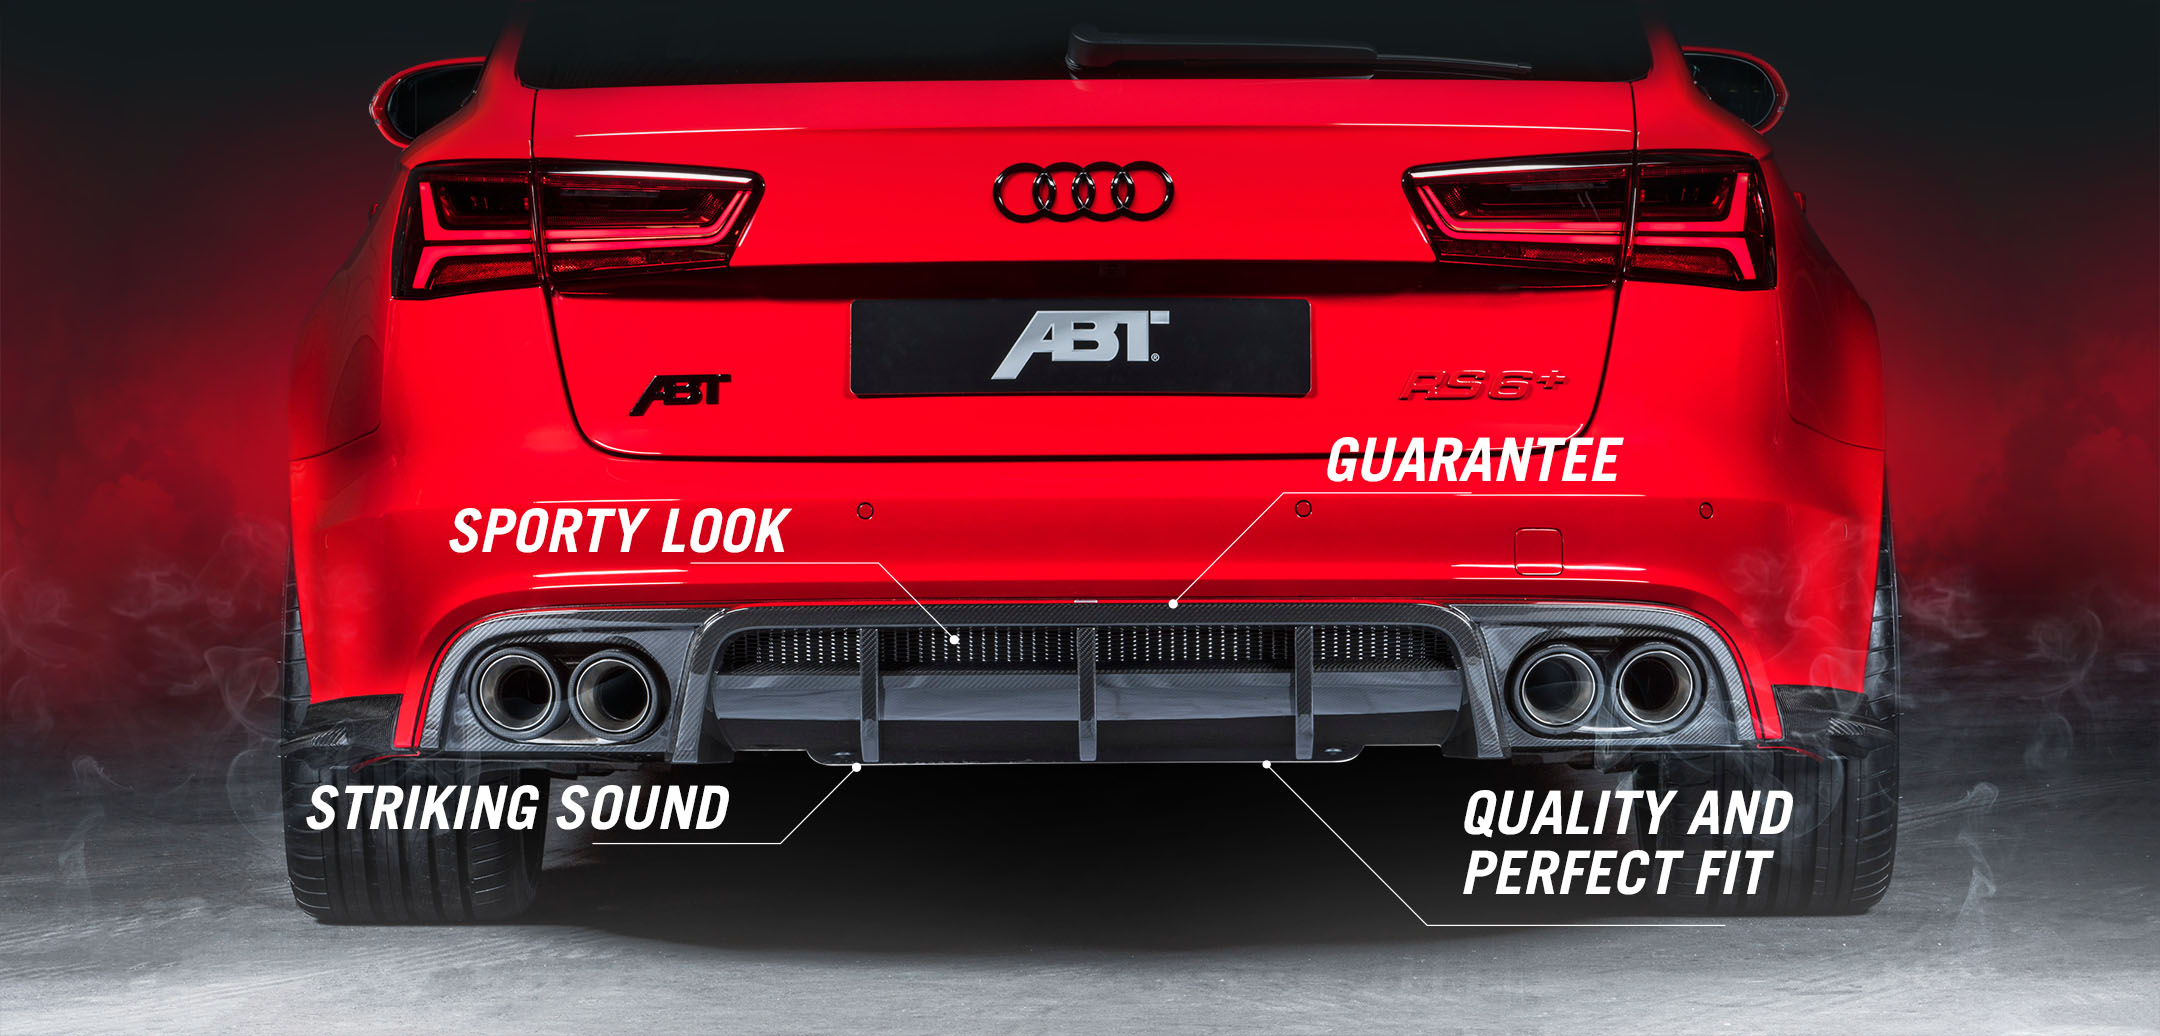 VW T-Roc - Audi Tuning, VW Tuning, Chiptuning von ABT Sportsline.